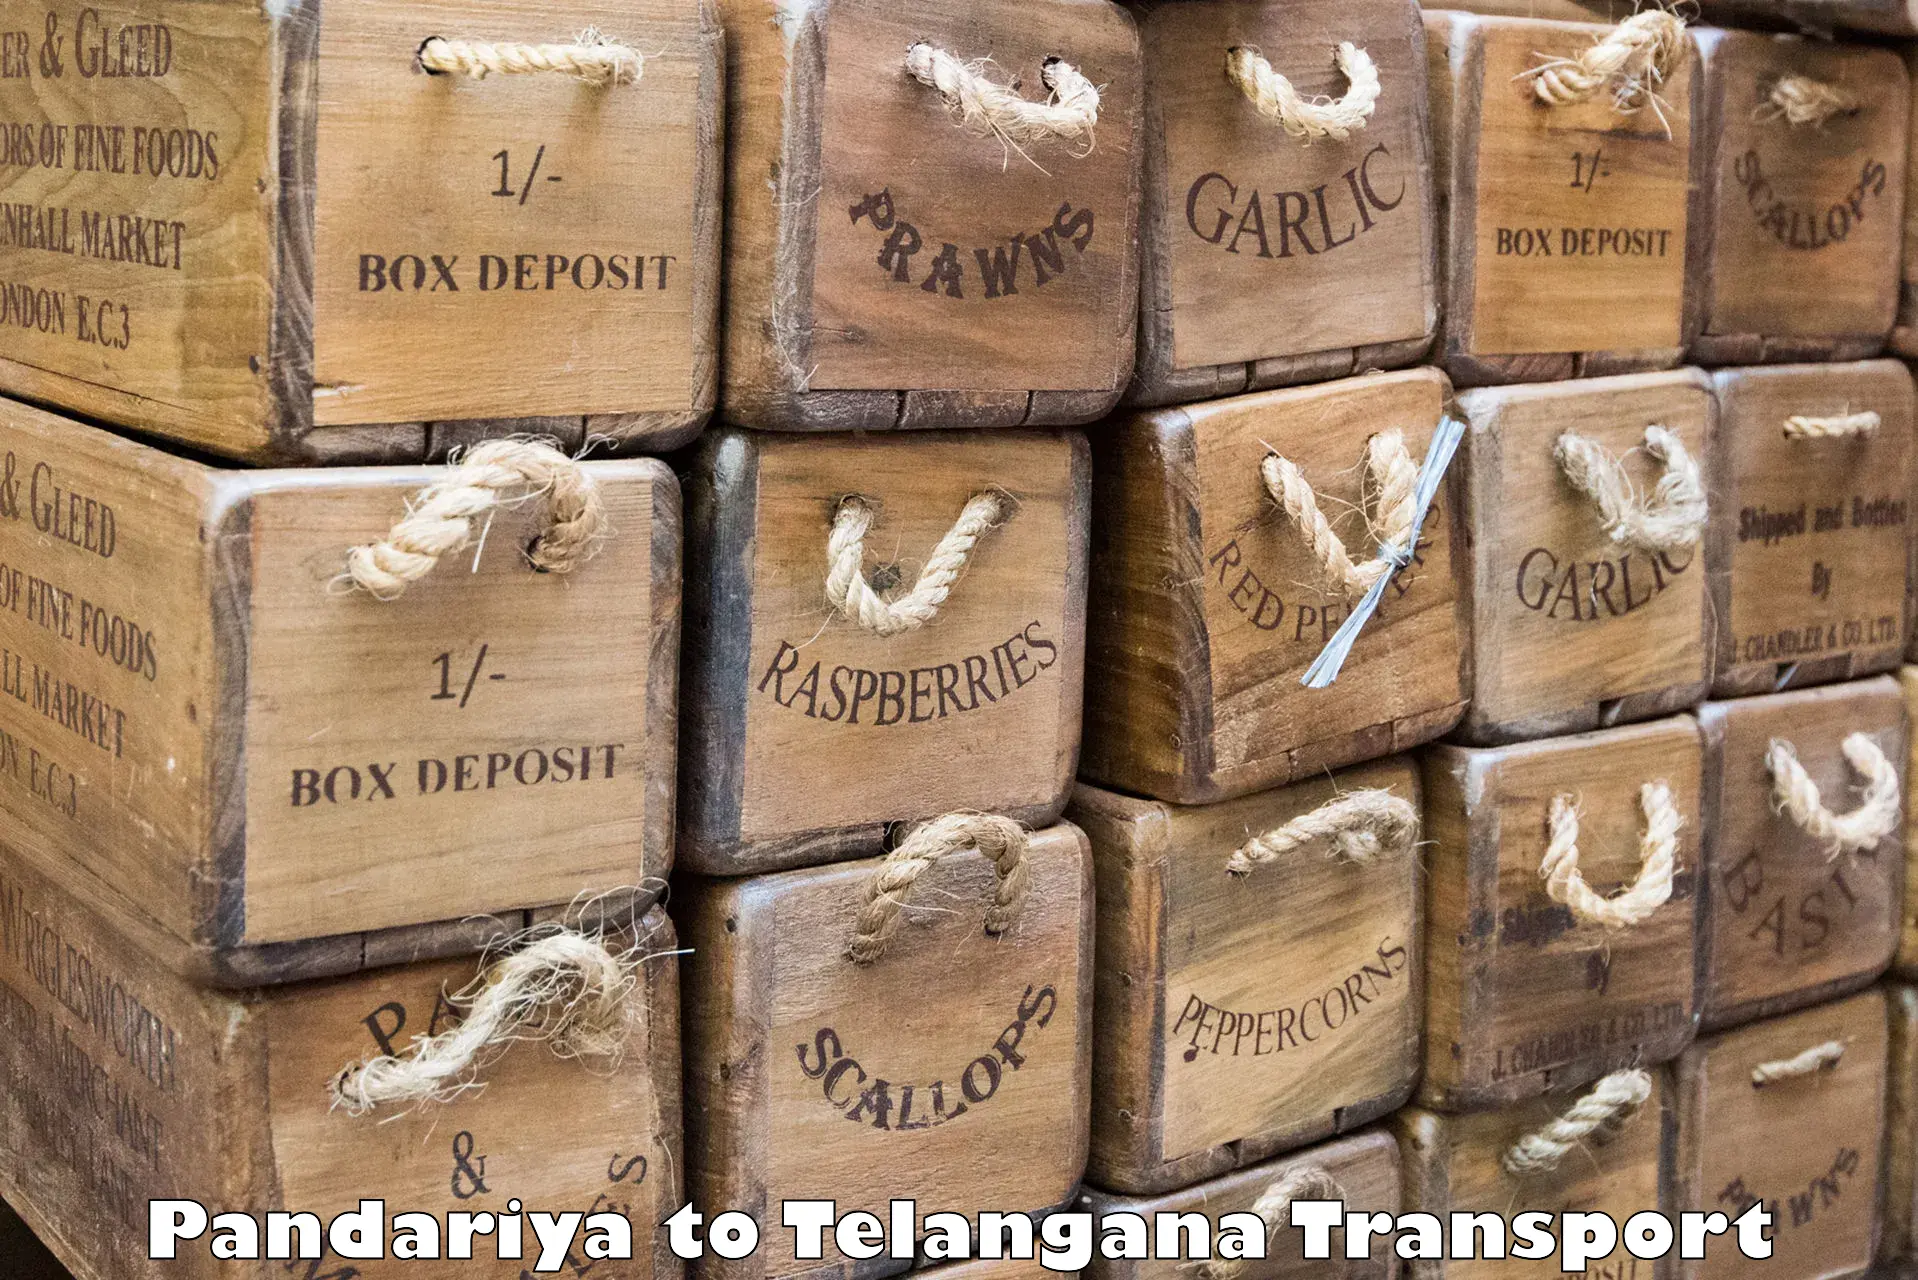 Shipping partner Pandariya to Karimnagar